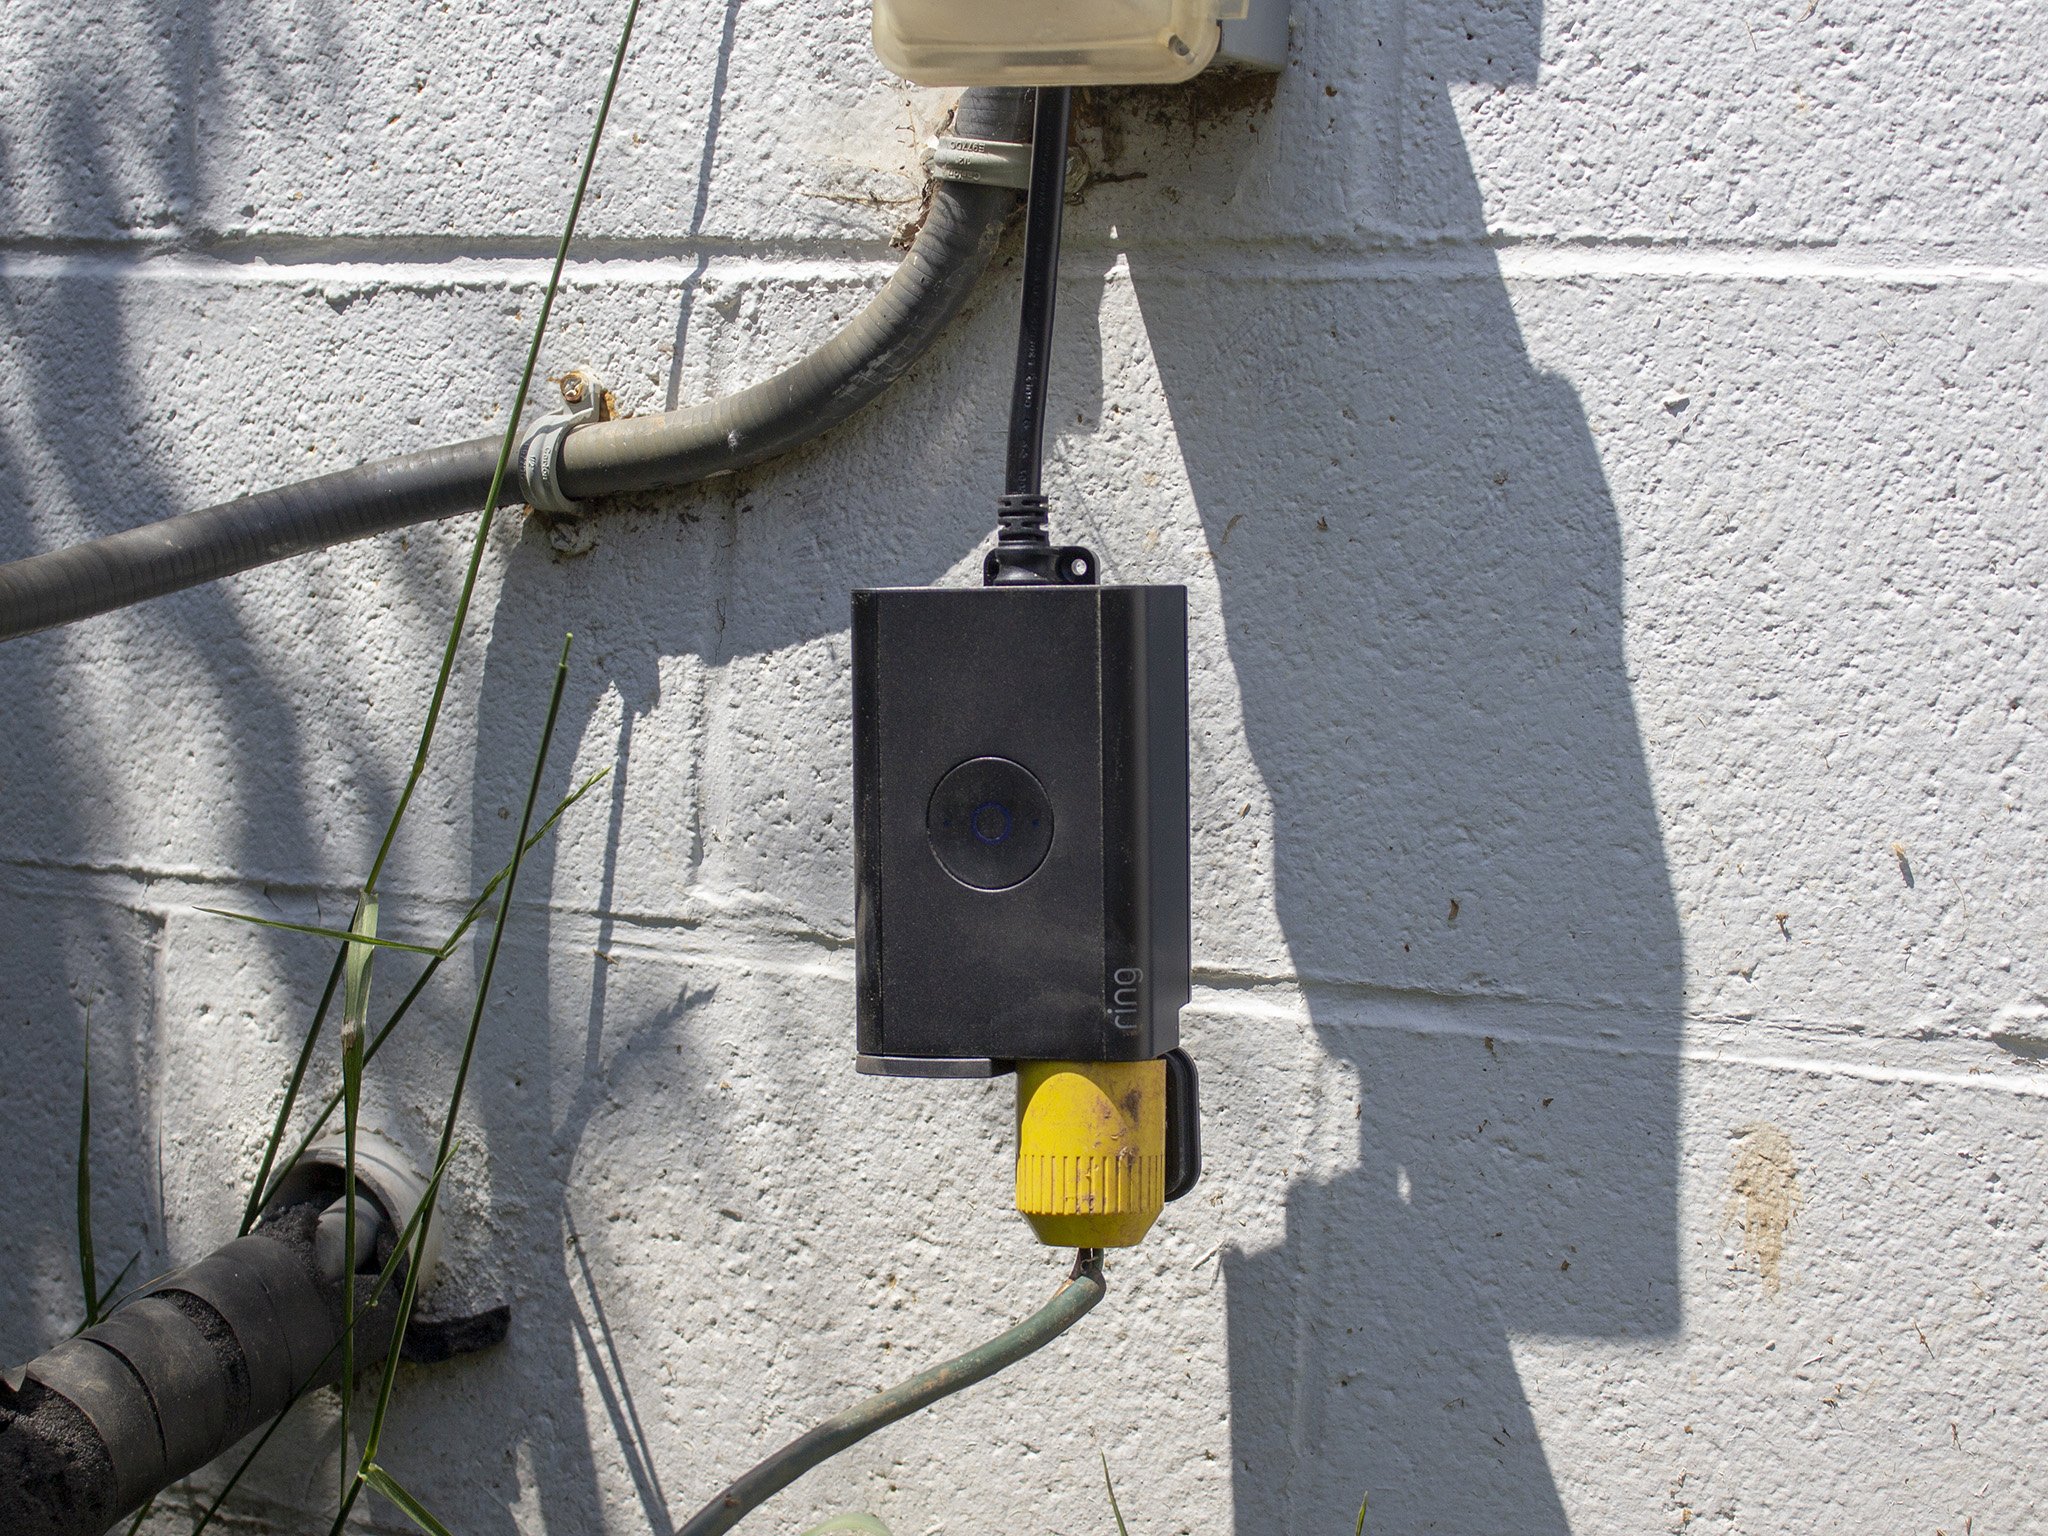 Ring Outdoor Smart Plug